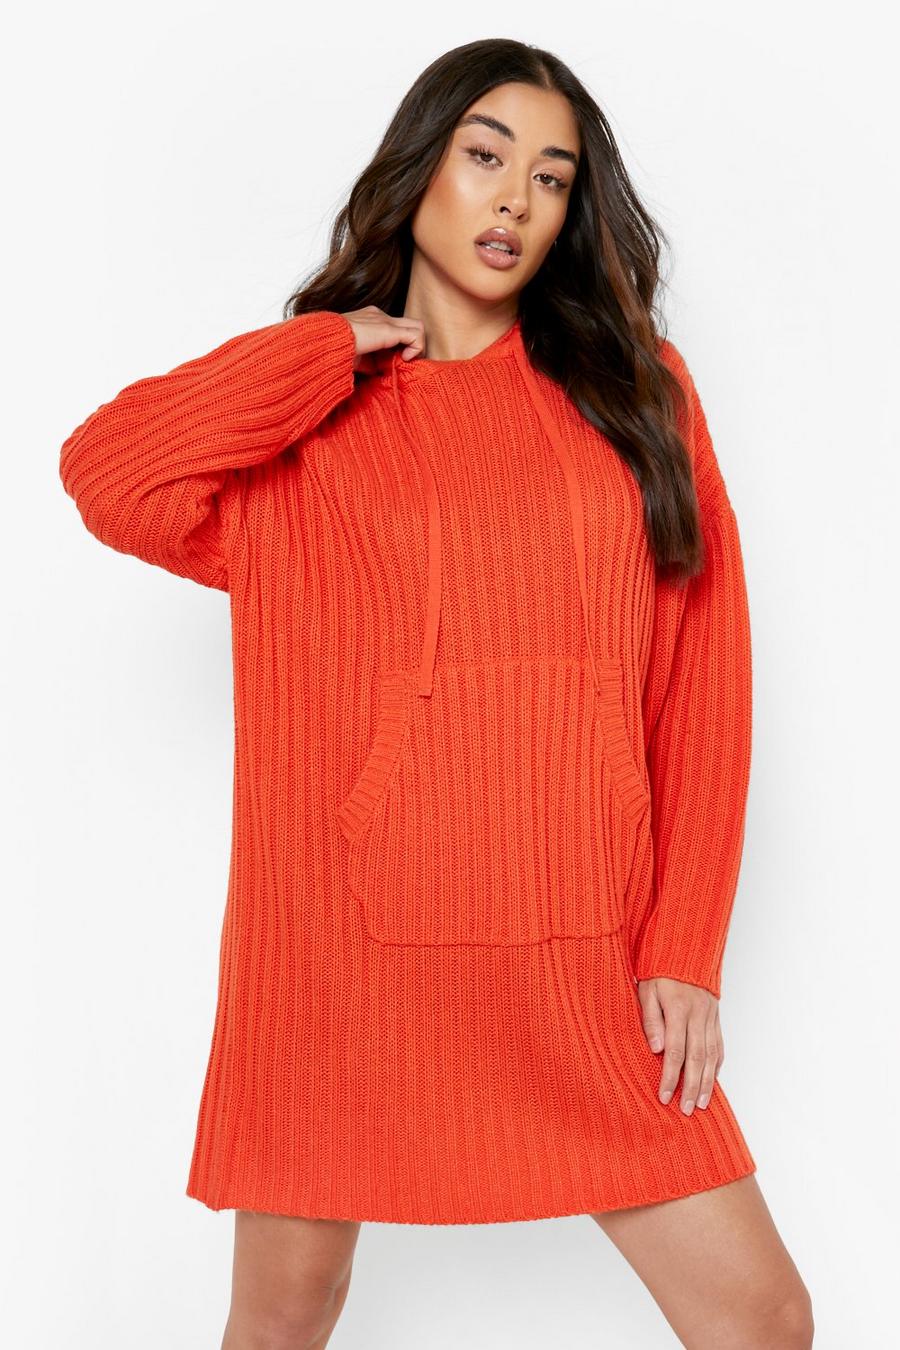 Tangerine orange Chunky Rib Knitted Jumper Dress